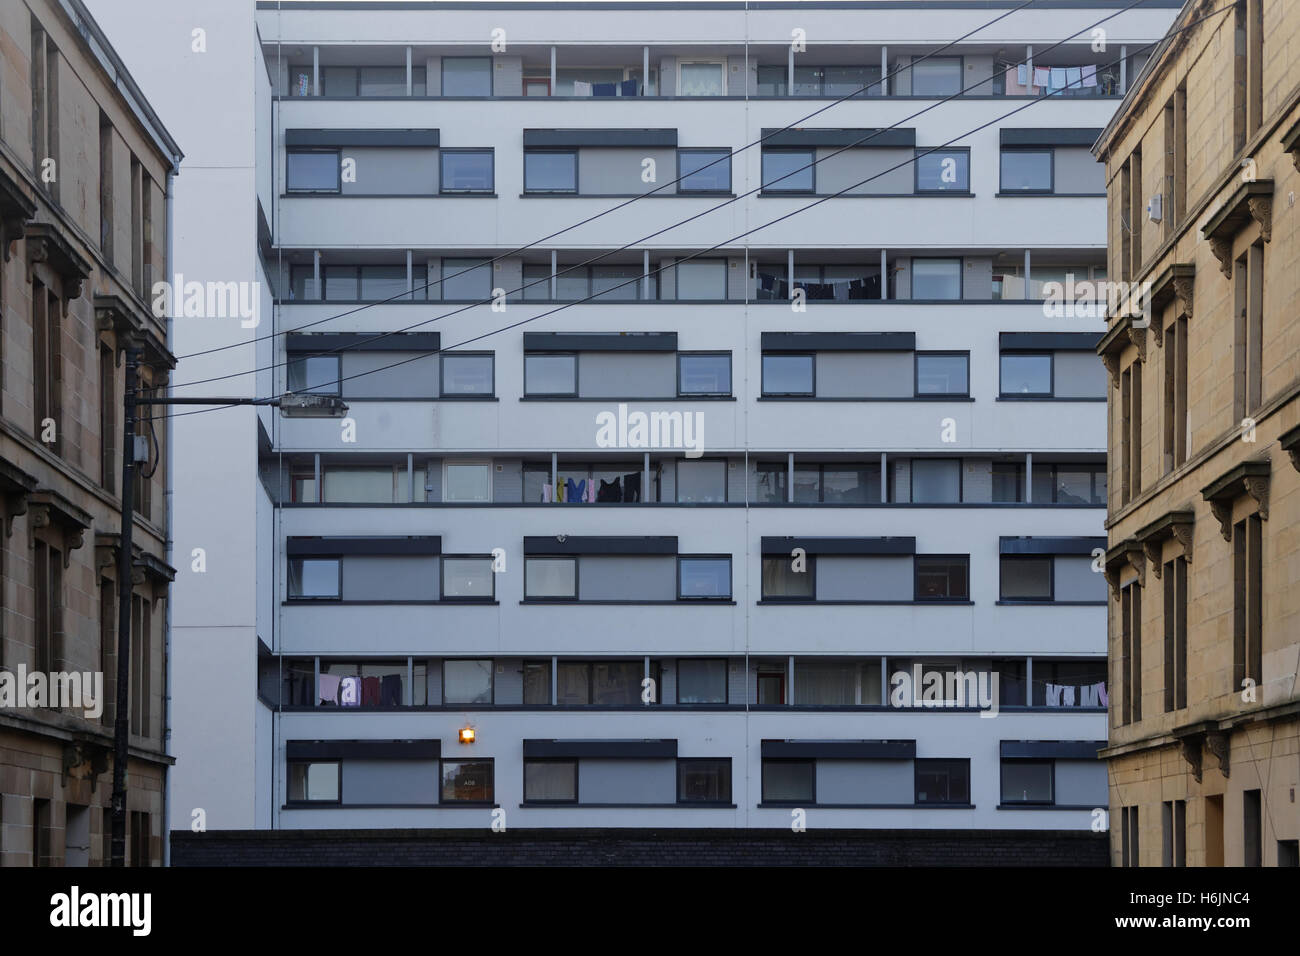 1960 Edificio moderno con balcones mostrando clase obrera viven en forma gráfica Foto de stock